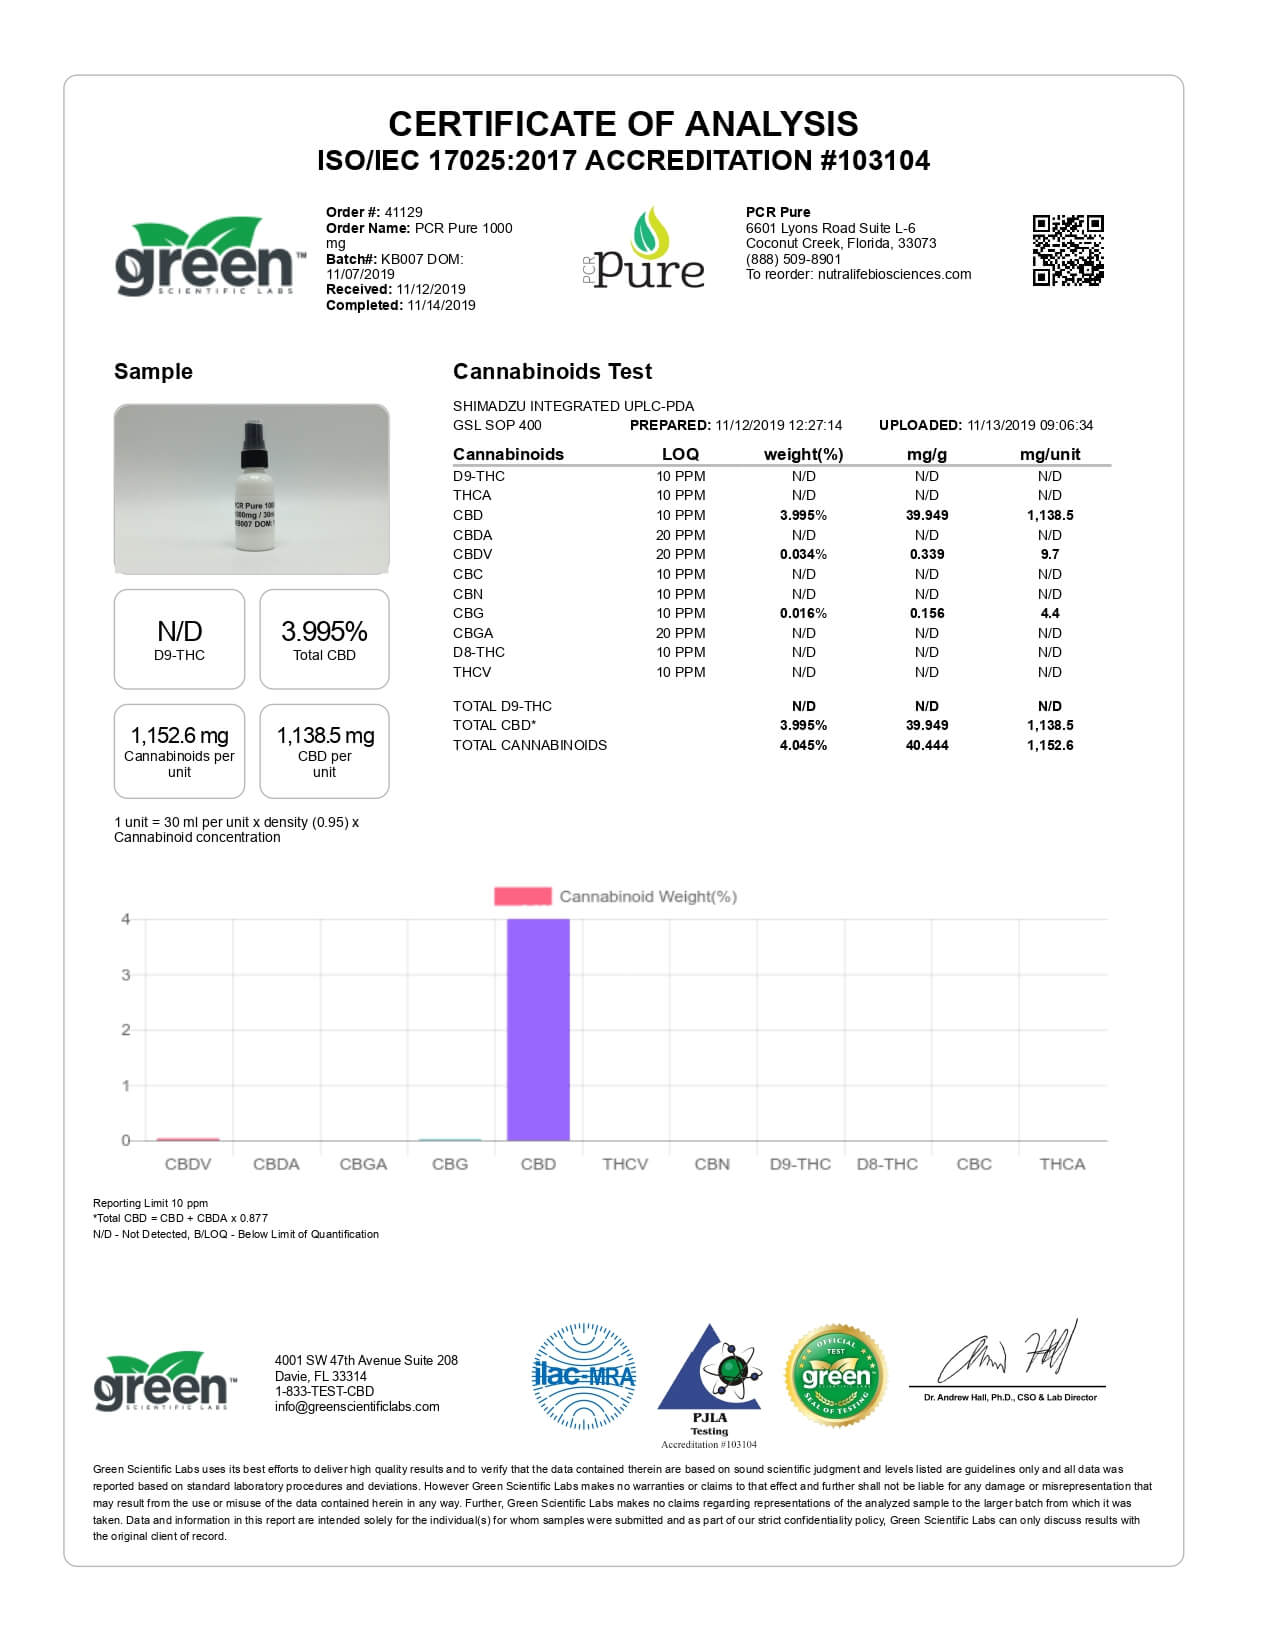 PCR Pure CBD Tincture Spray Full Spectrum 1000mg Lab Report